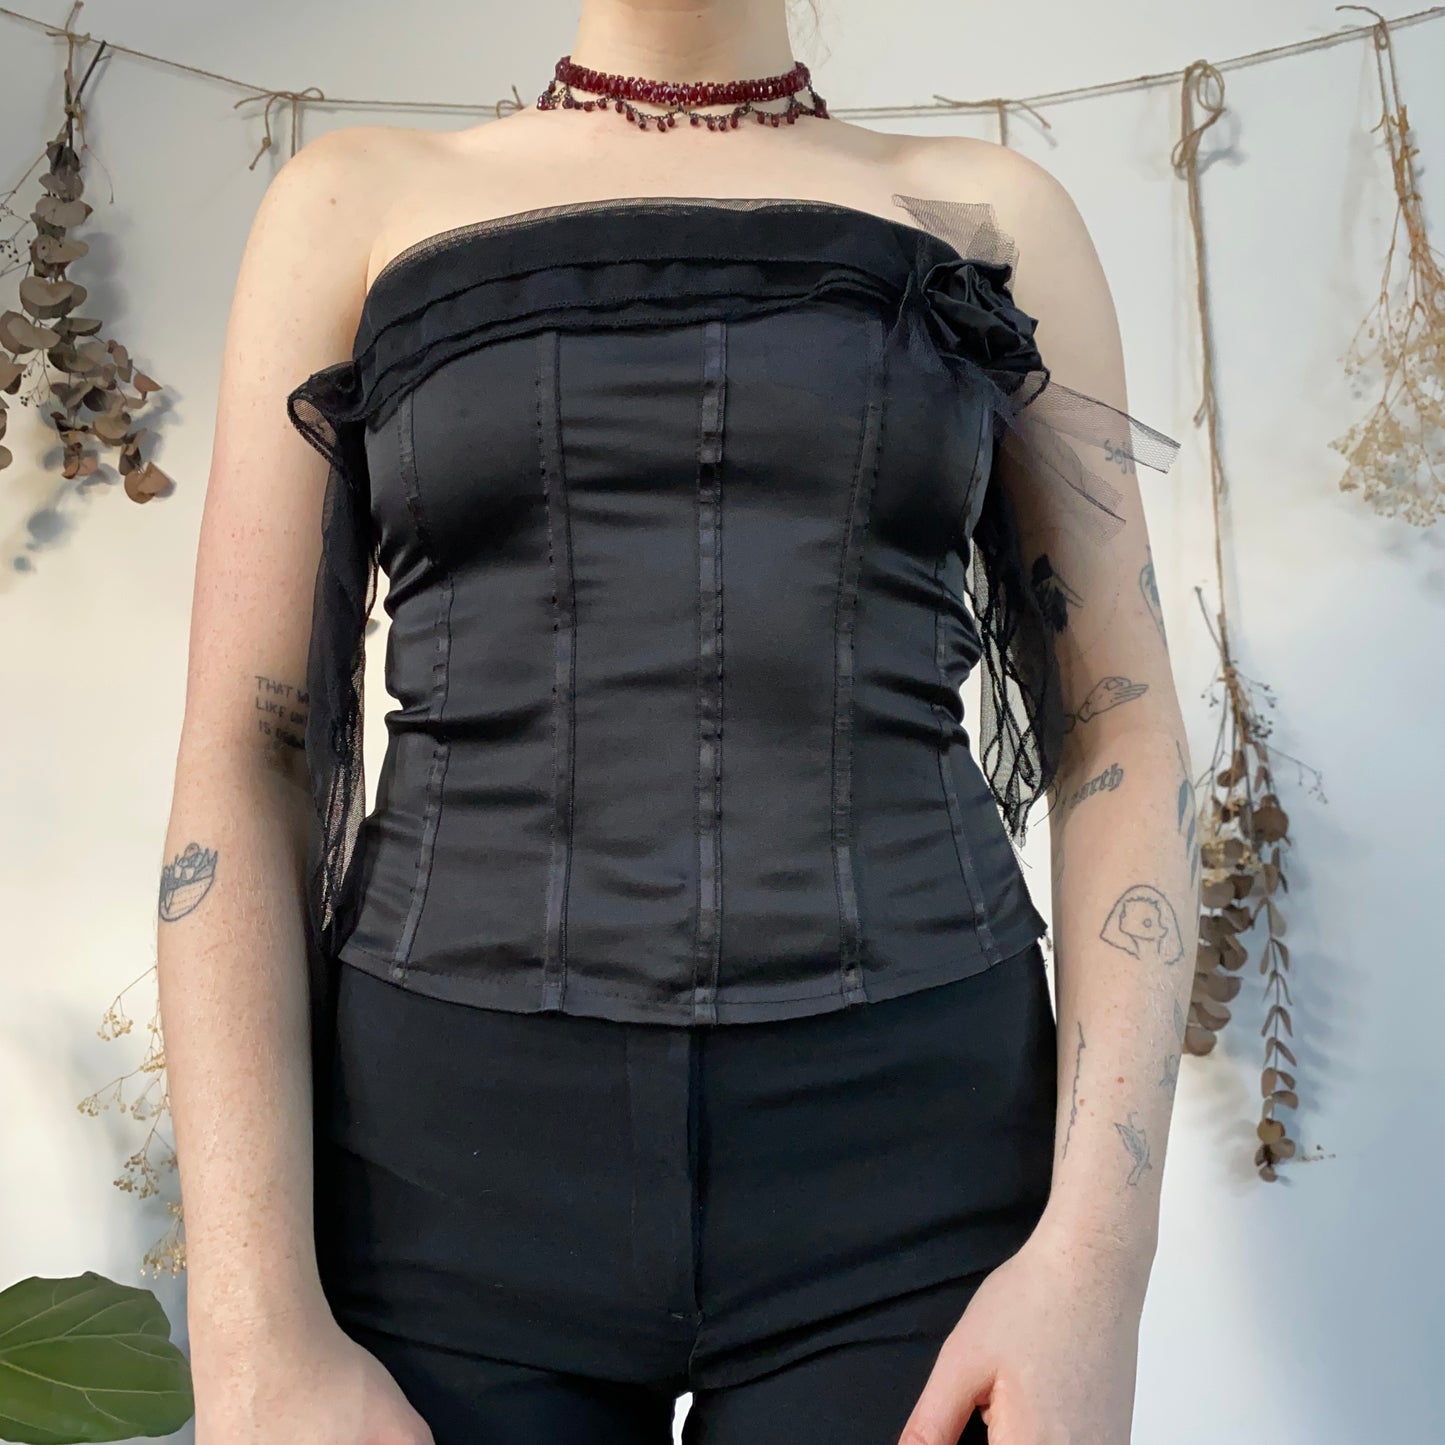 Black corset - size M